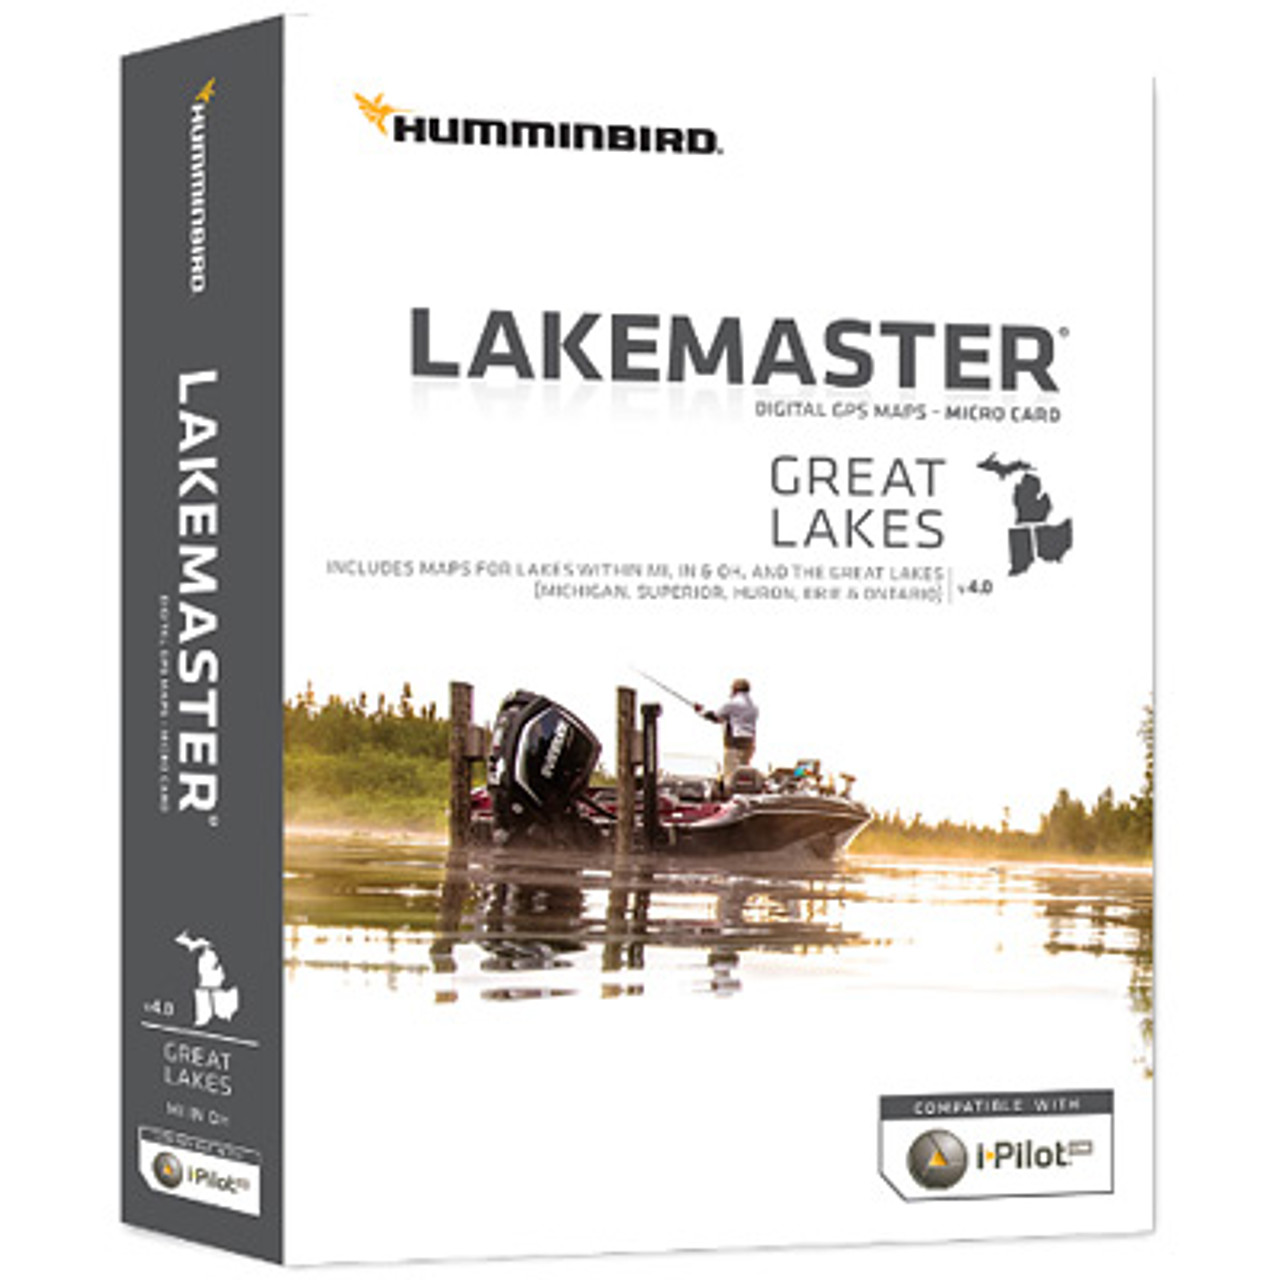 LakeMaster Great Lakes v4.0 Digital Maps by Humminbird - VanDam